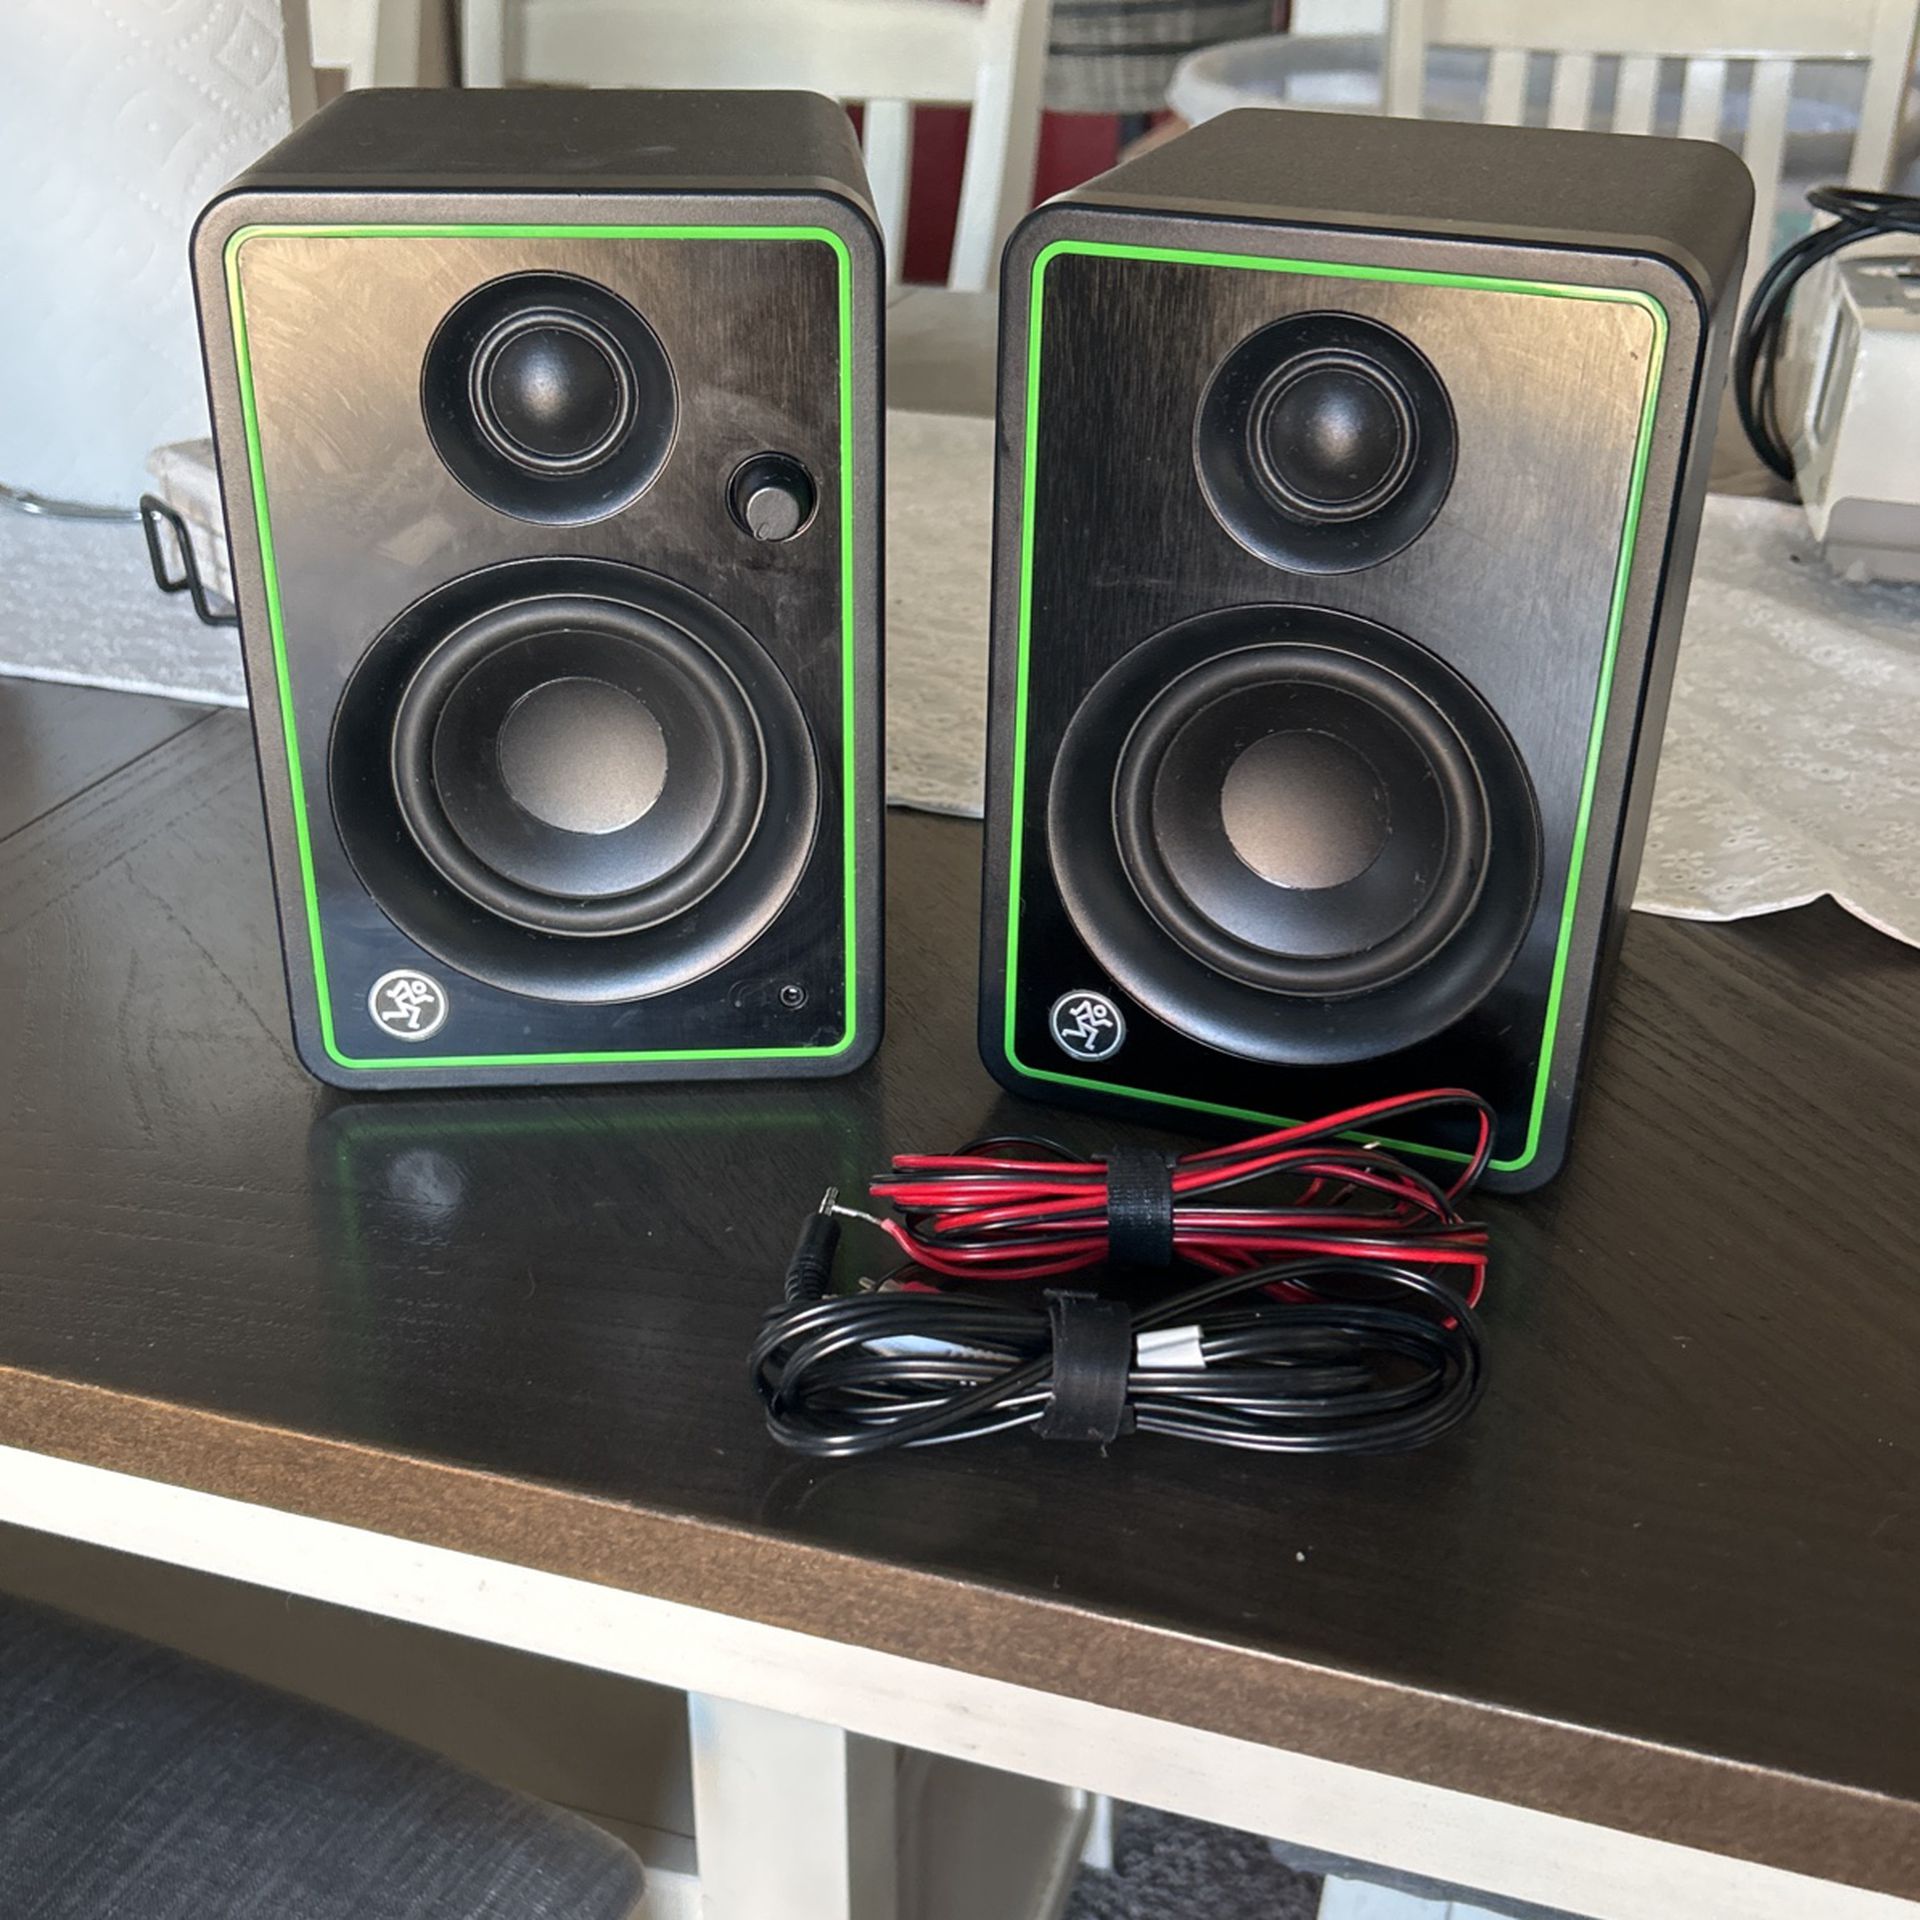 Cr3-x Studio Speakers